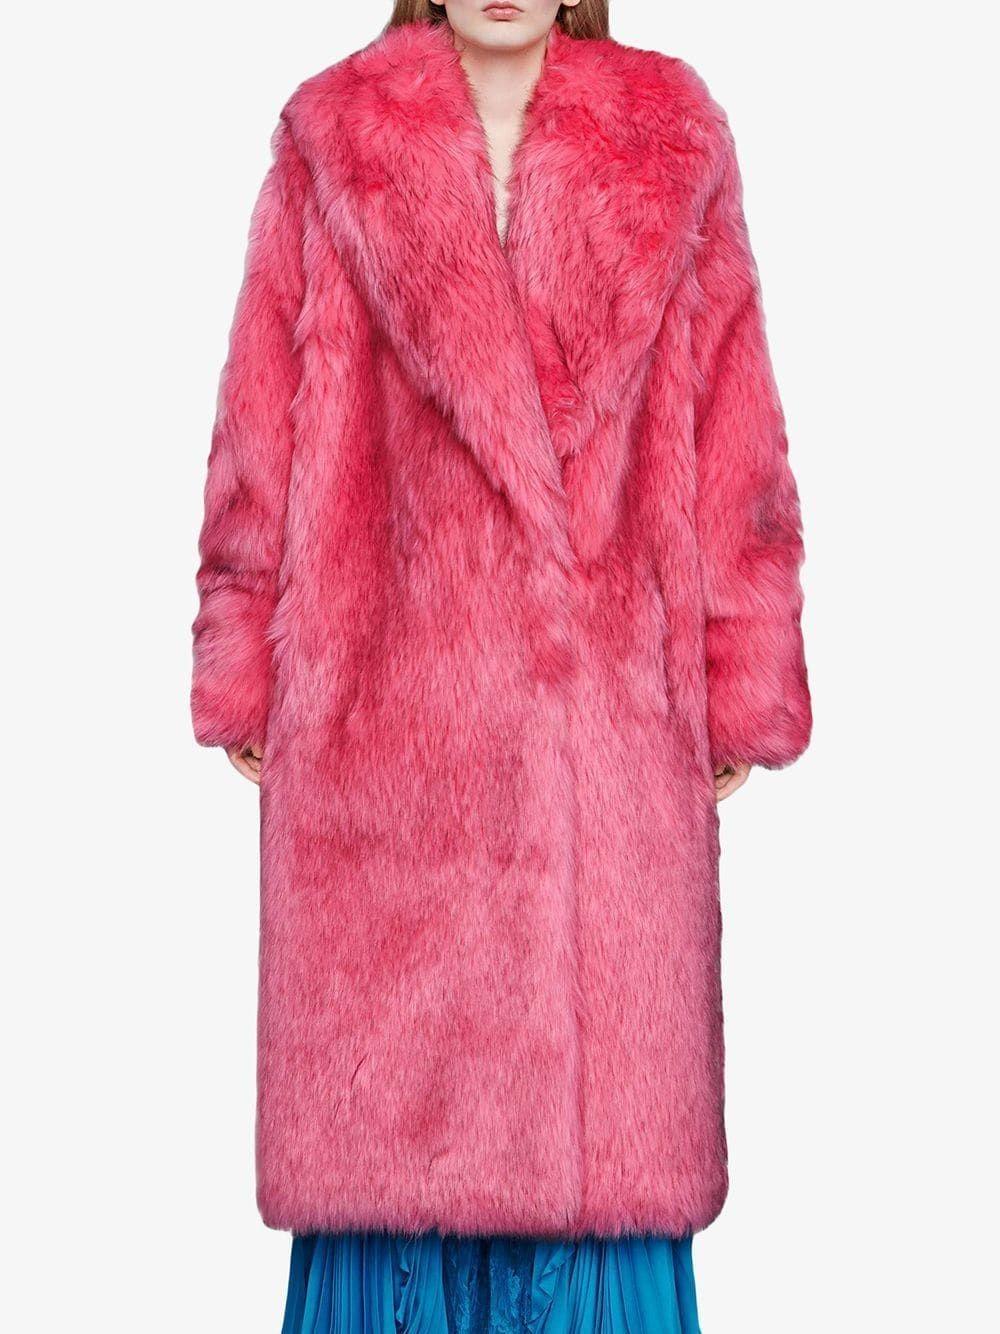 Gucci Faux Fur Coat Online Sale, UP TO 64% OFF